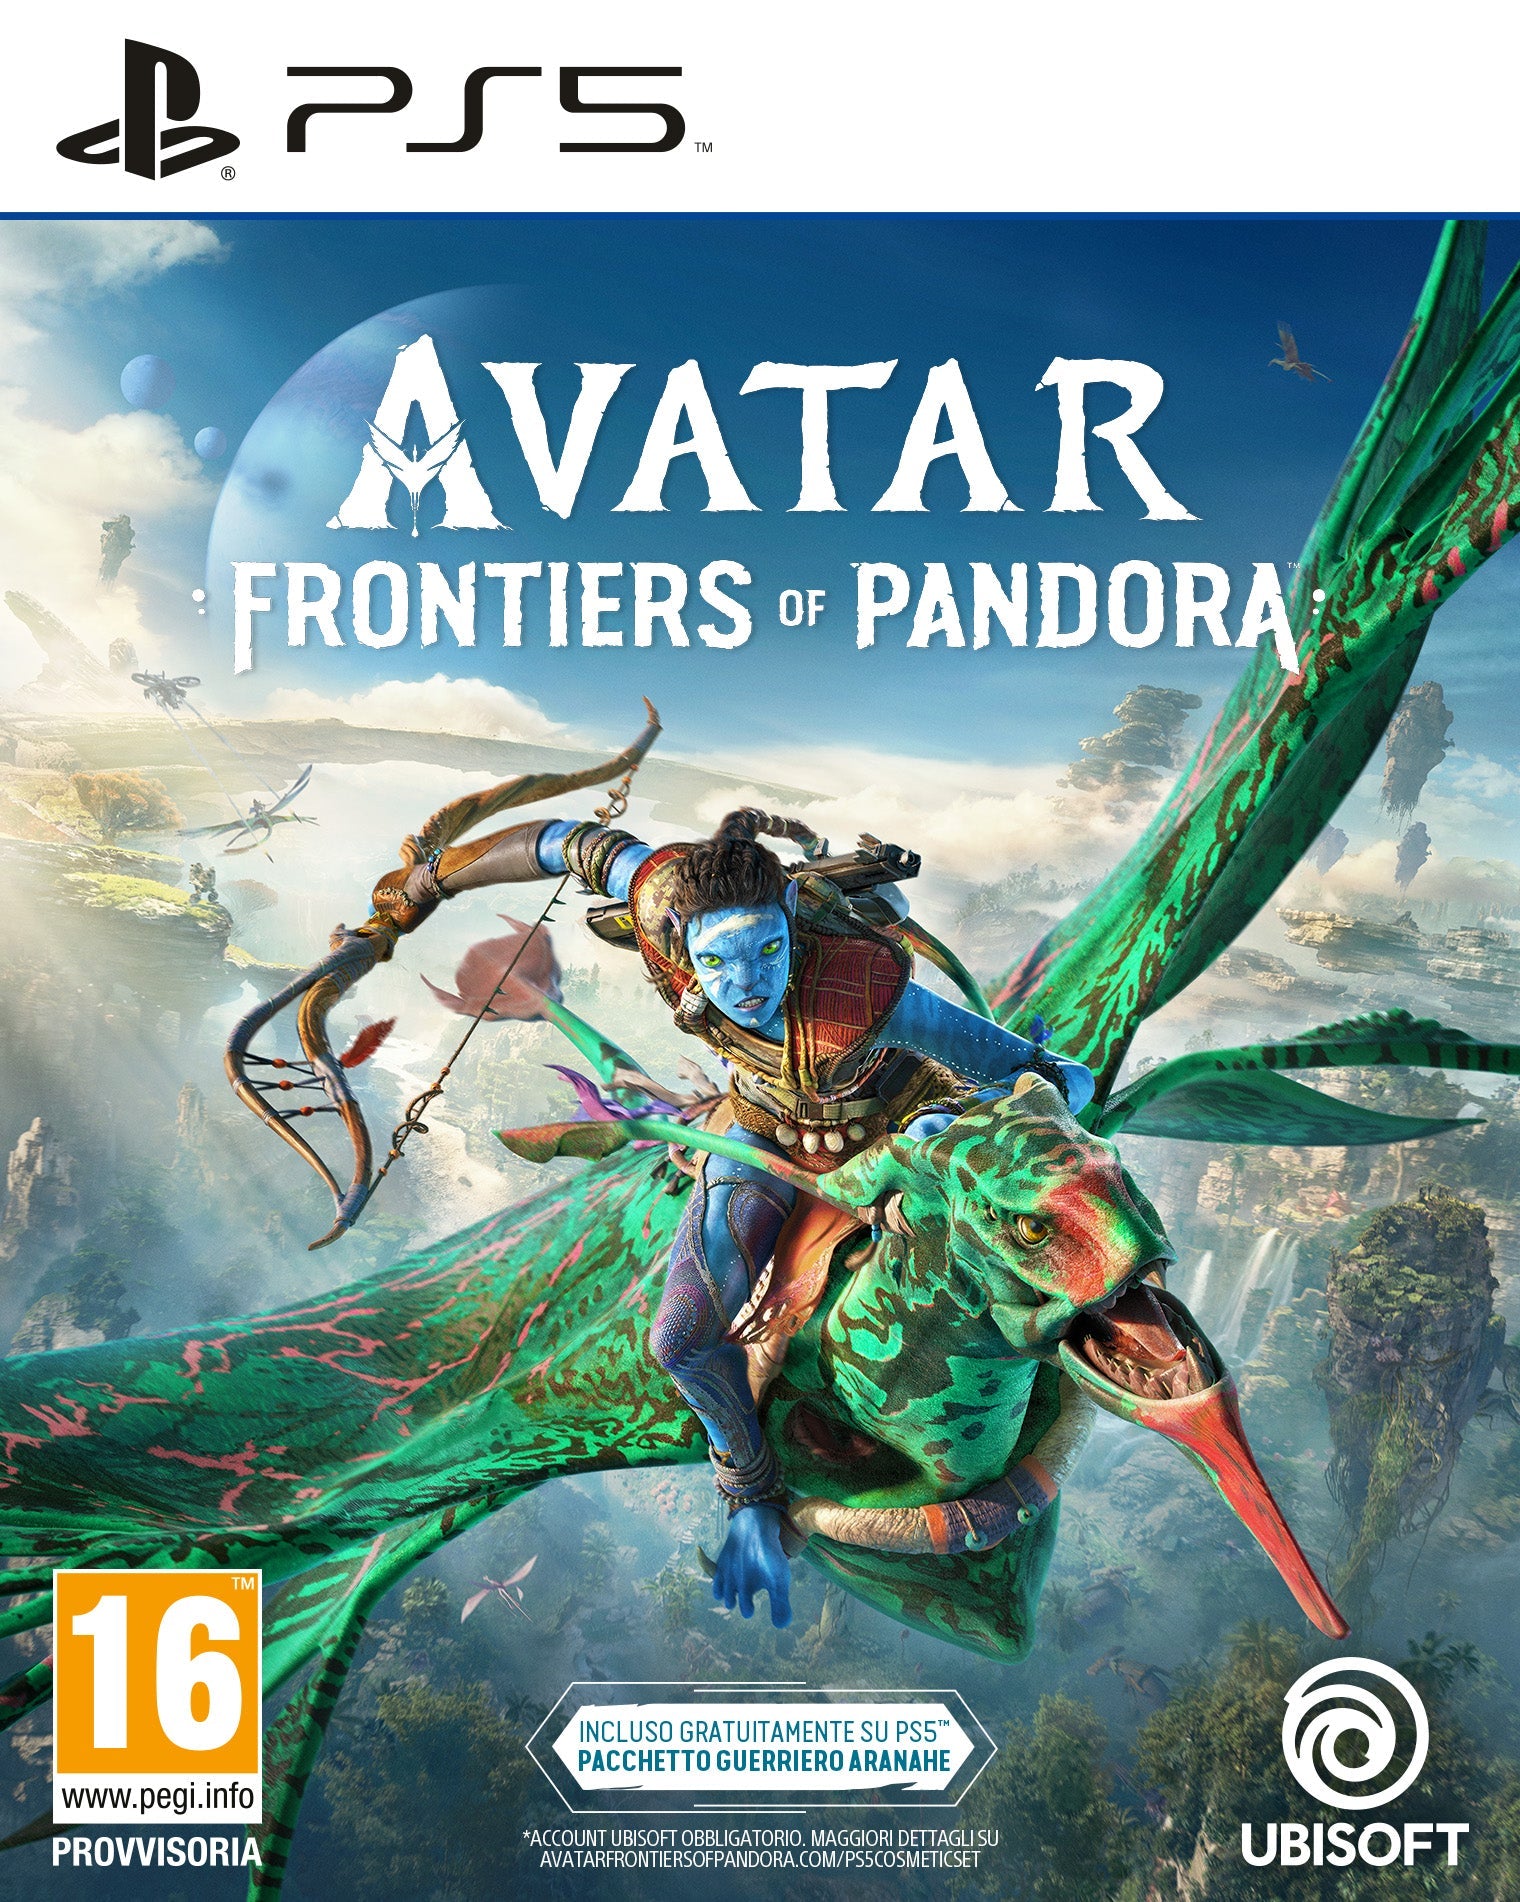 PS5 Avatar : Frontiers Of Pandora EU - Disponibilità immediata